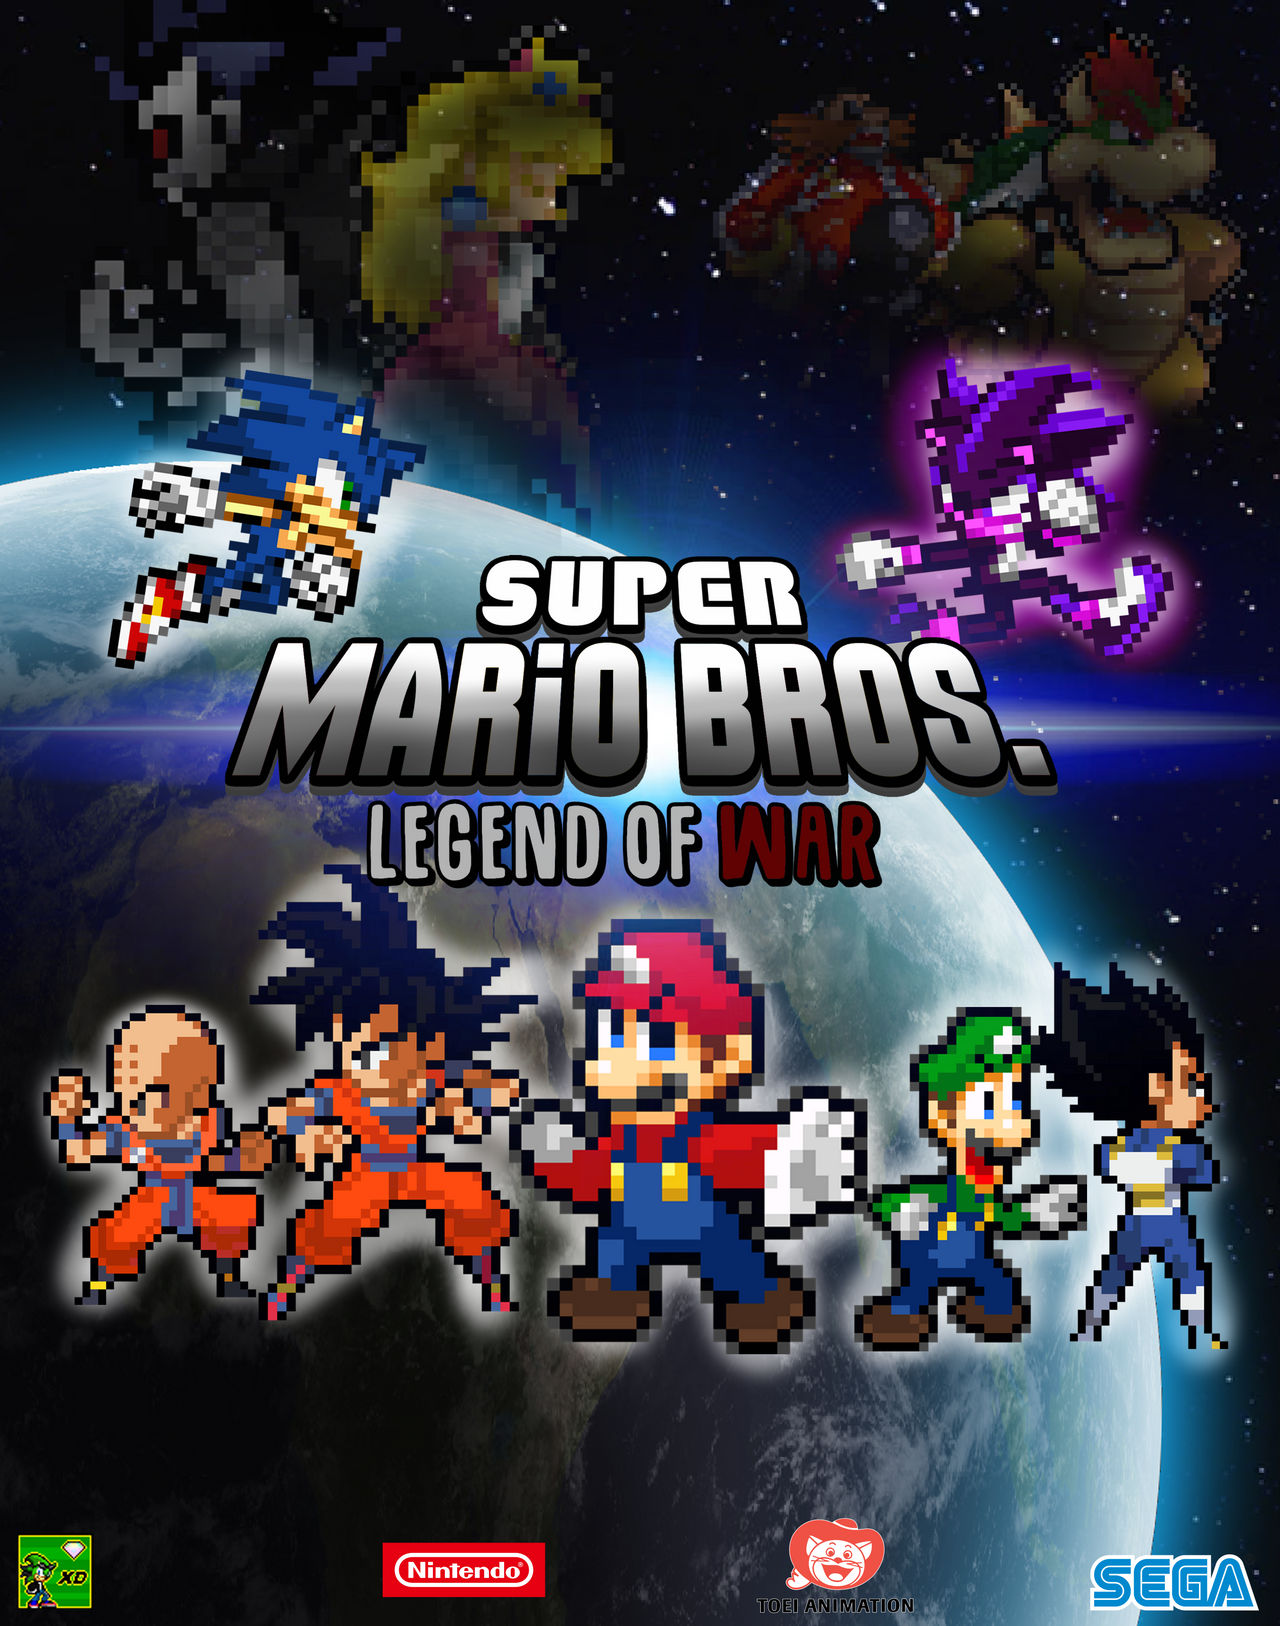 Super Mario Bros. Legend of War Season 1 Poster by AS02X on DeviantArt